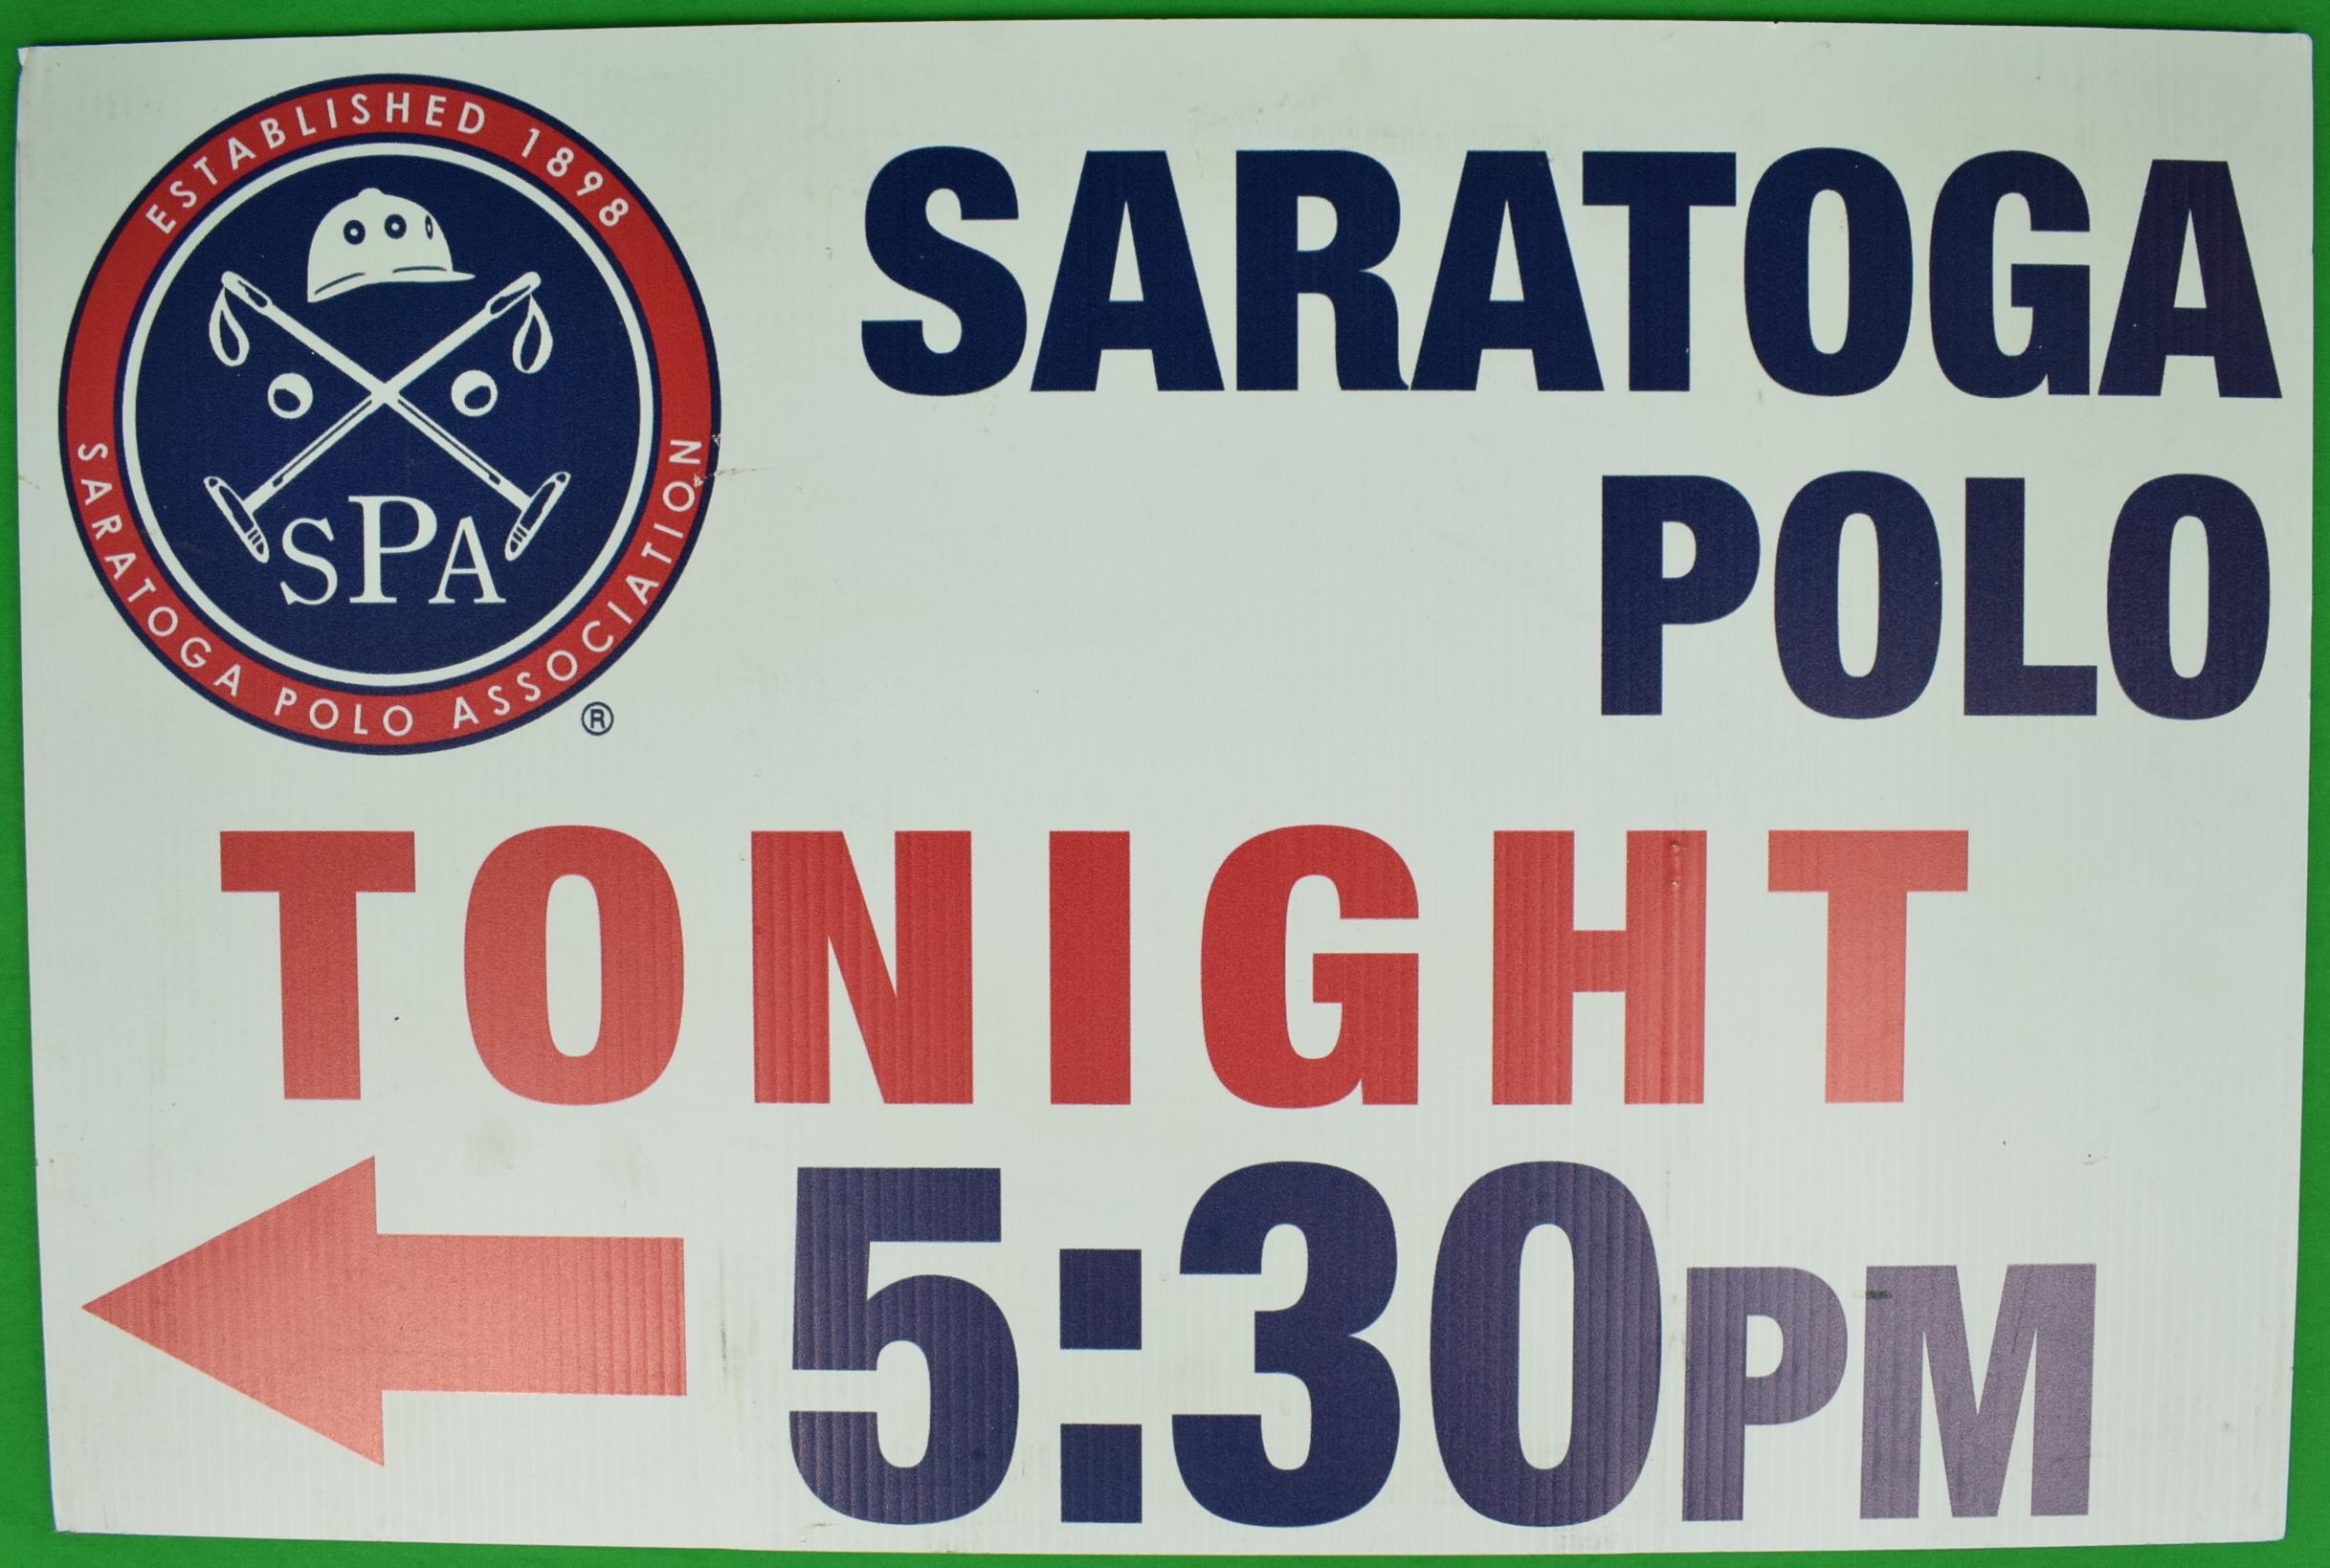 Saratoga Polo heute Abend 5:30 PM Directional Sign – Art von Unknown